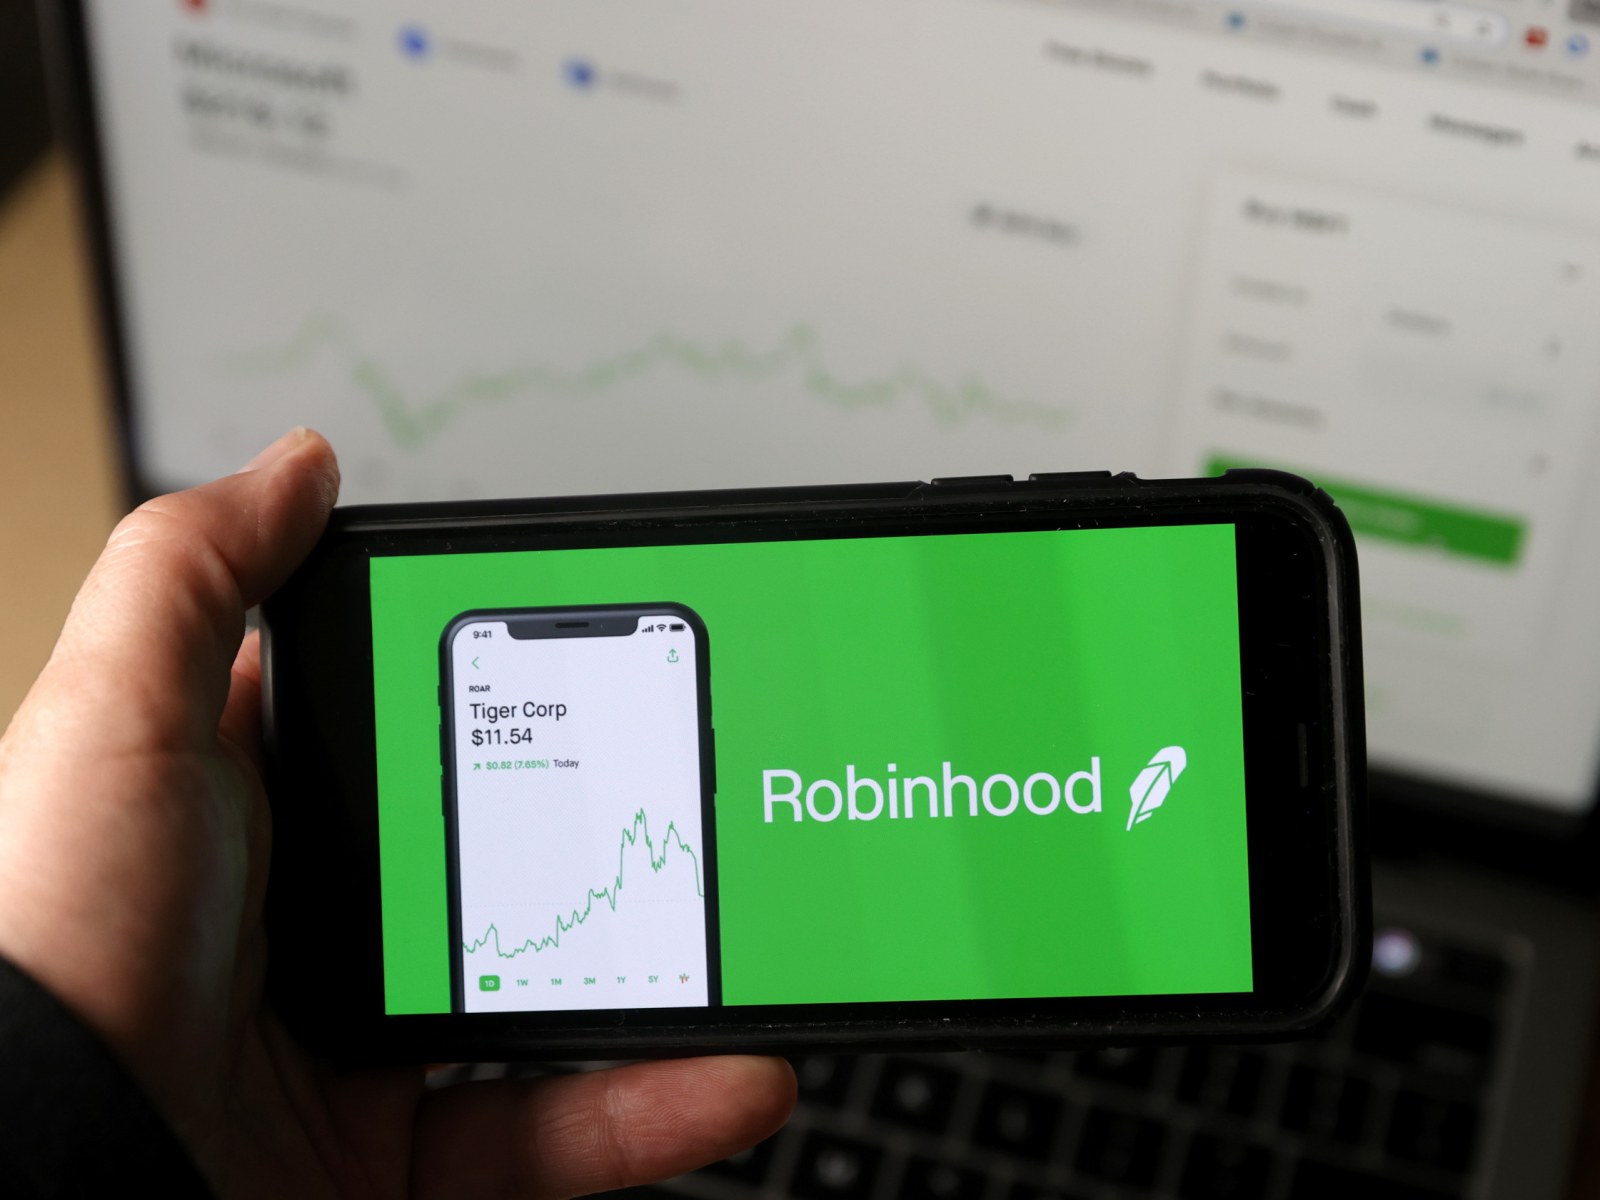 Robin hood investing feesbok spread betting ig markets login